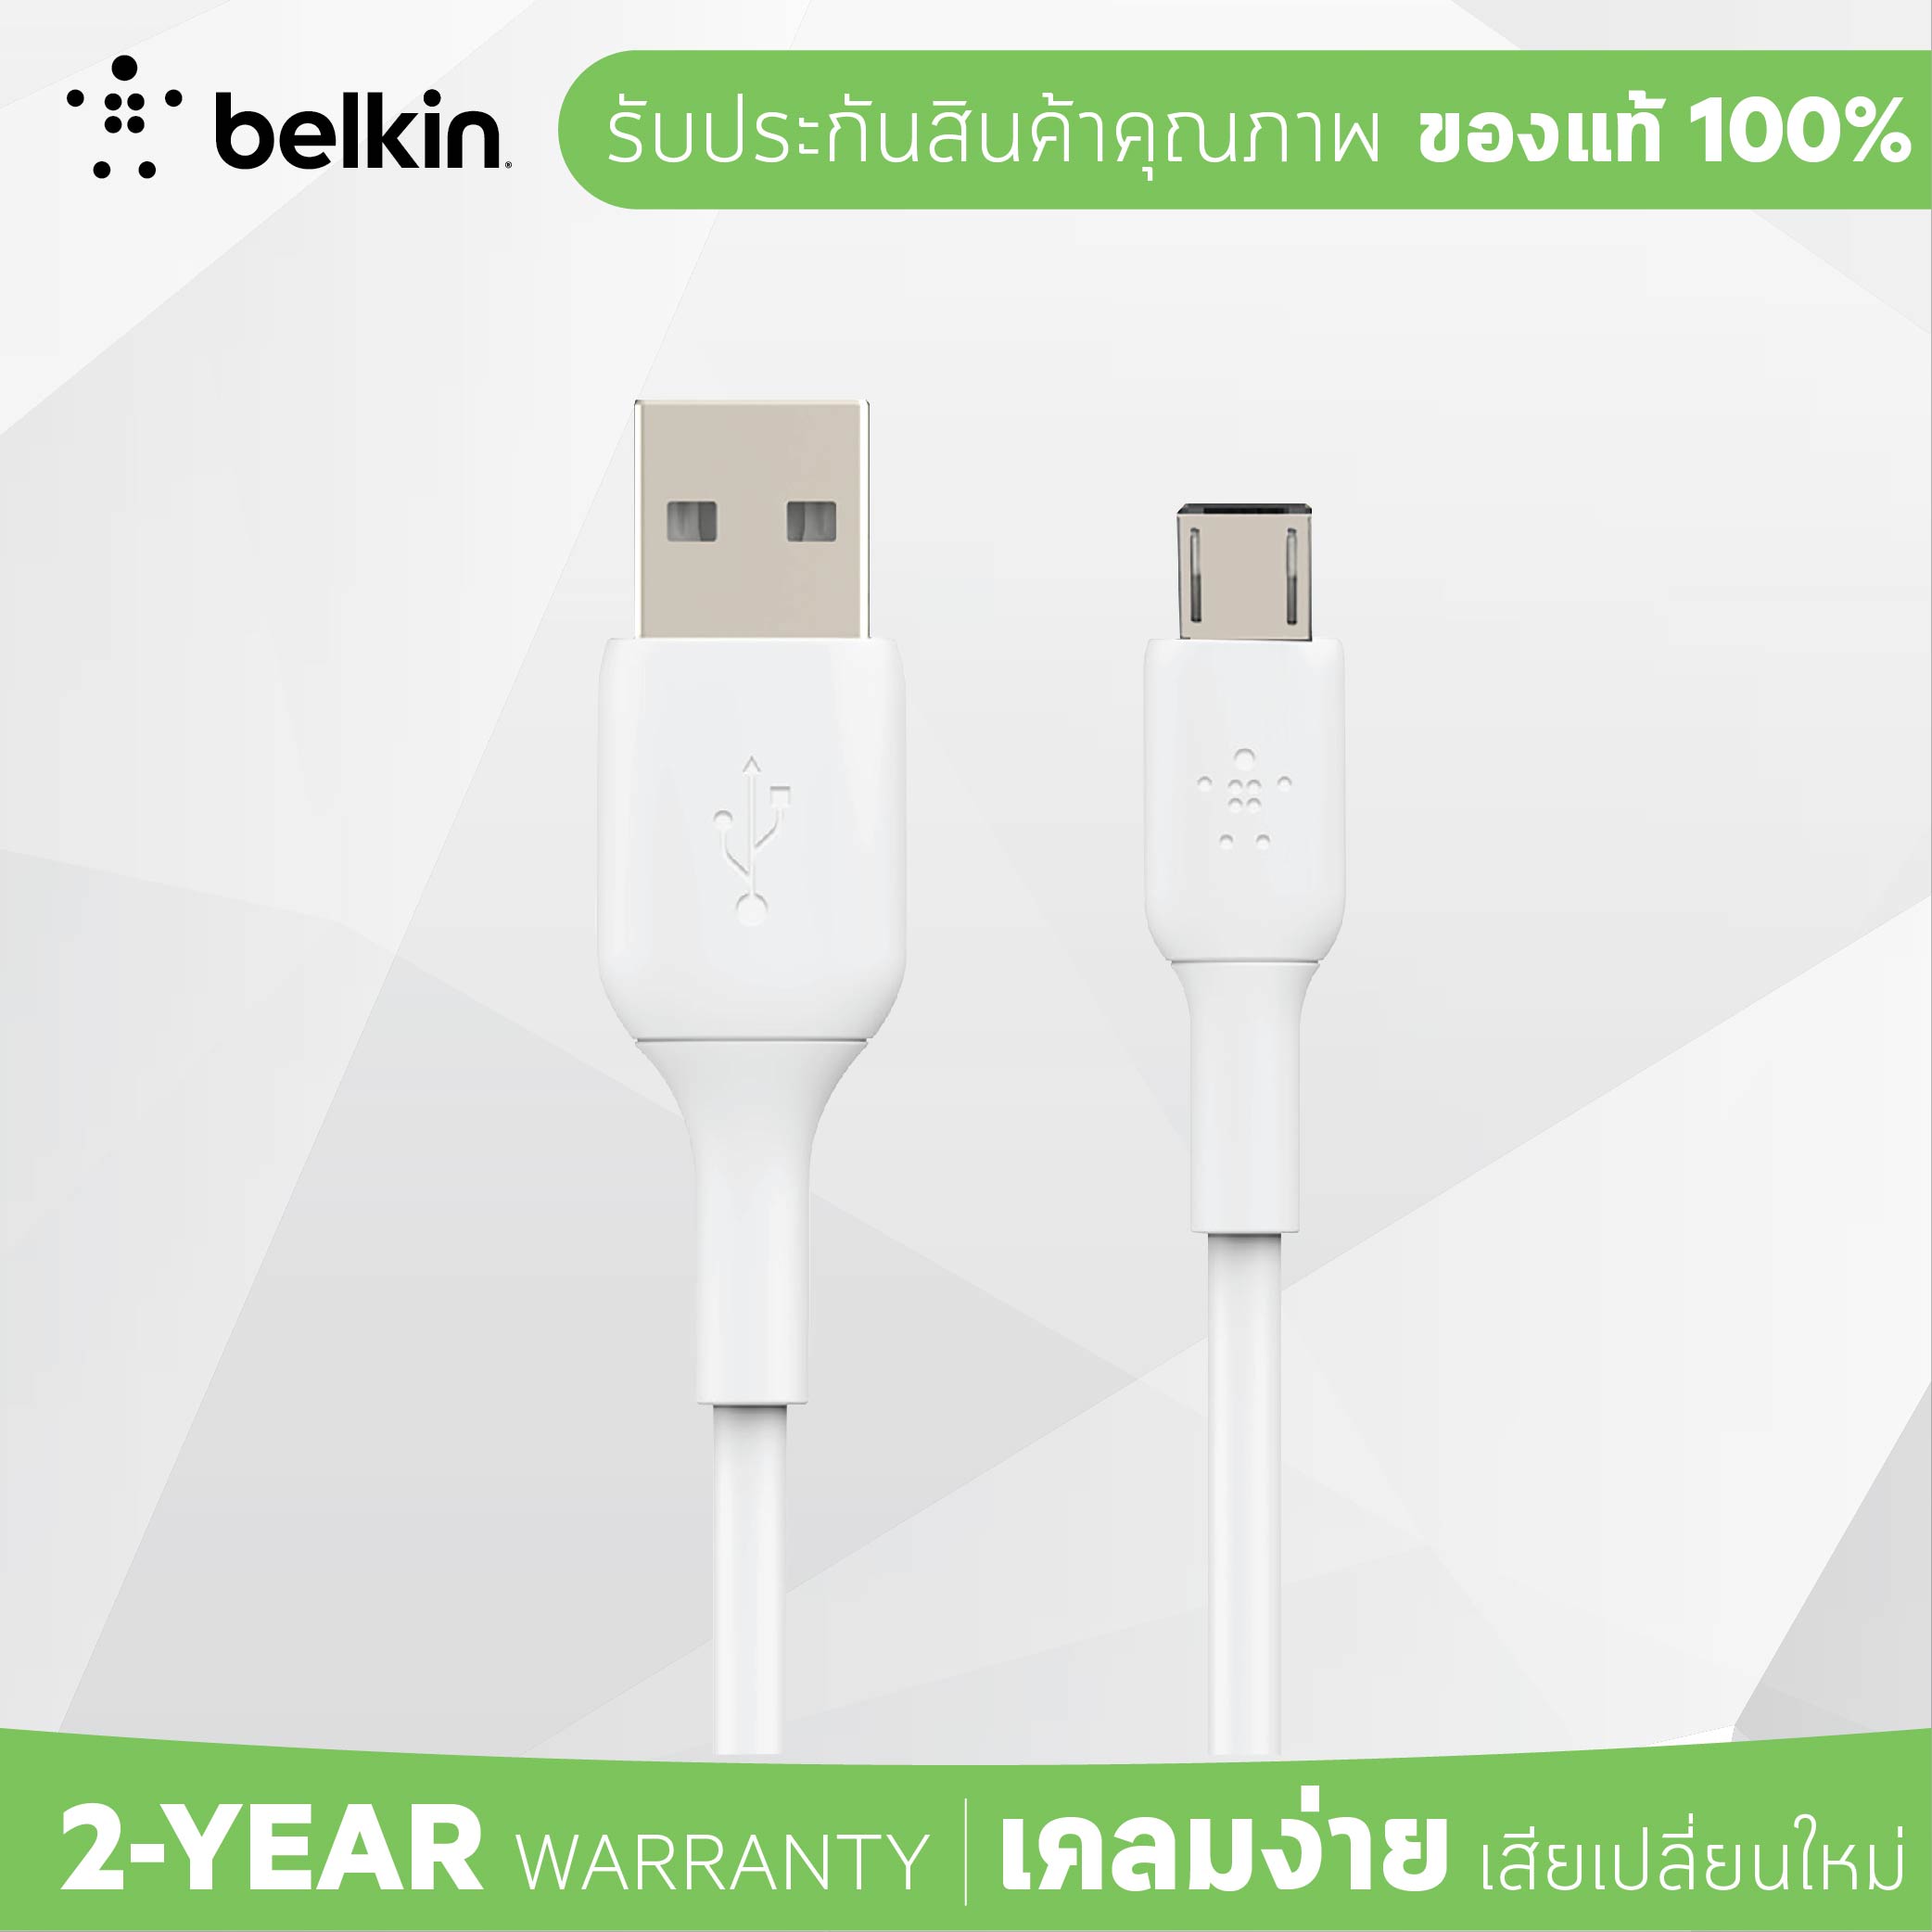 Belkin สายชาร์จ Mixit Micro-USB สายชาร์จและซิงค์สำหรับสมาร์ทโฟน /แท็ปเล็ตระบบแอนดรอยด์ รองรับการชาร์จอุปกรณ์อื่นๆที่เป็นพอร์ต Micro-USB